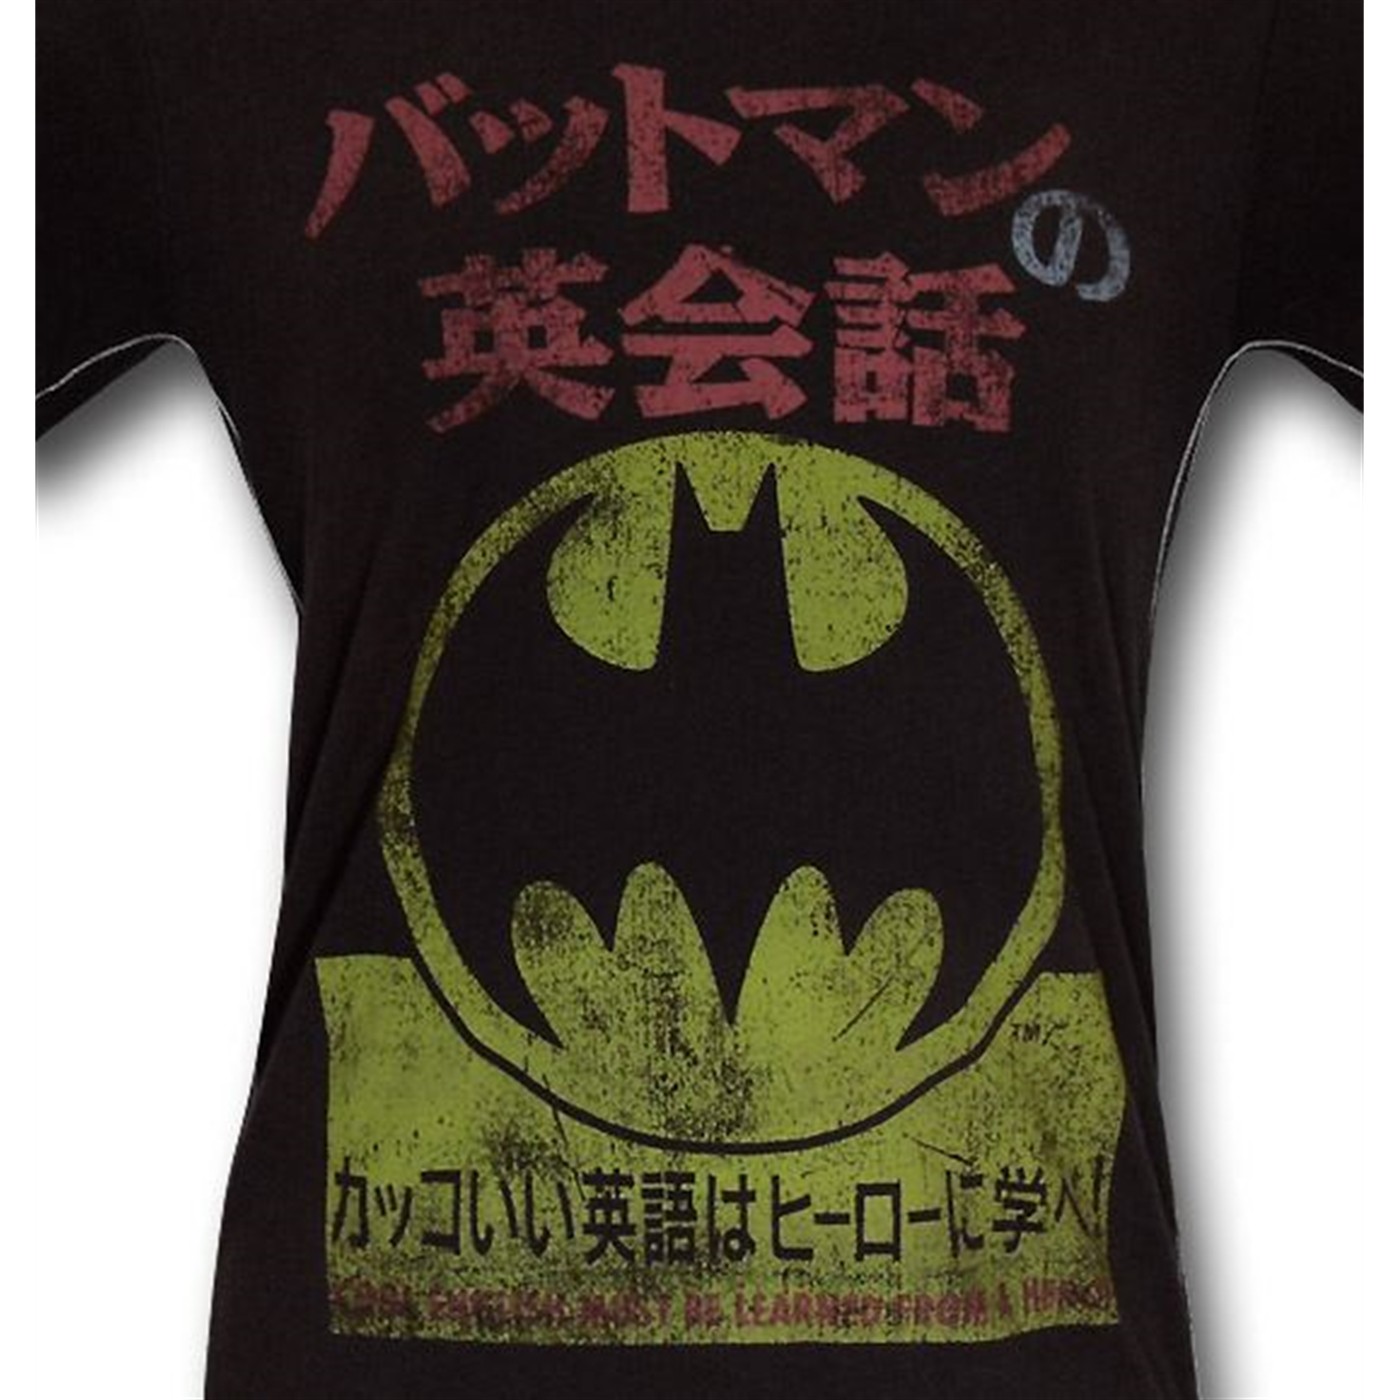 Batman Japanese Cool English Trunk T-Shirt